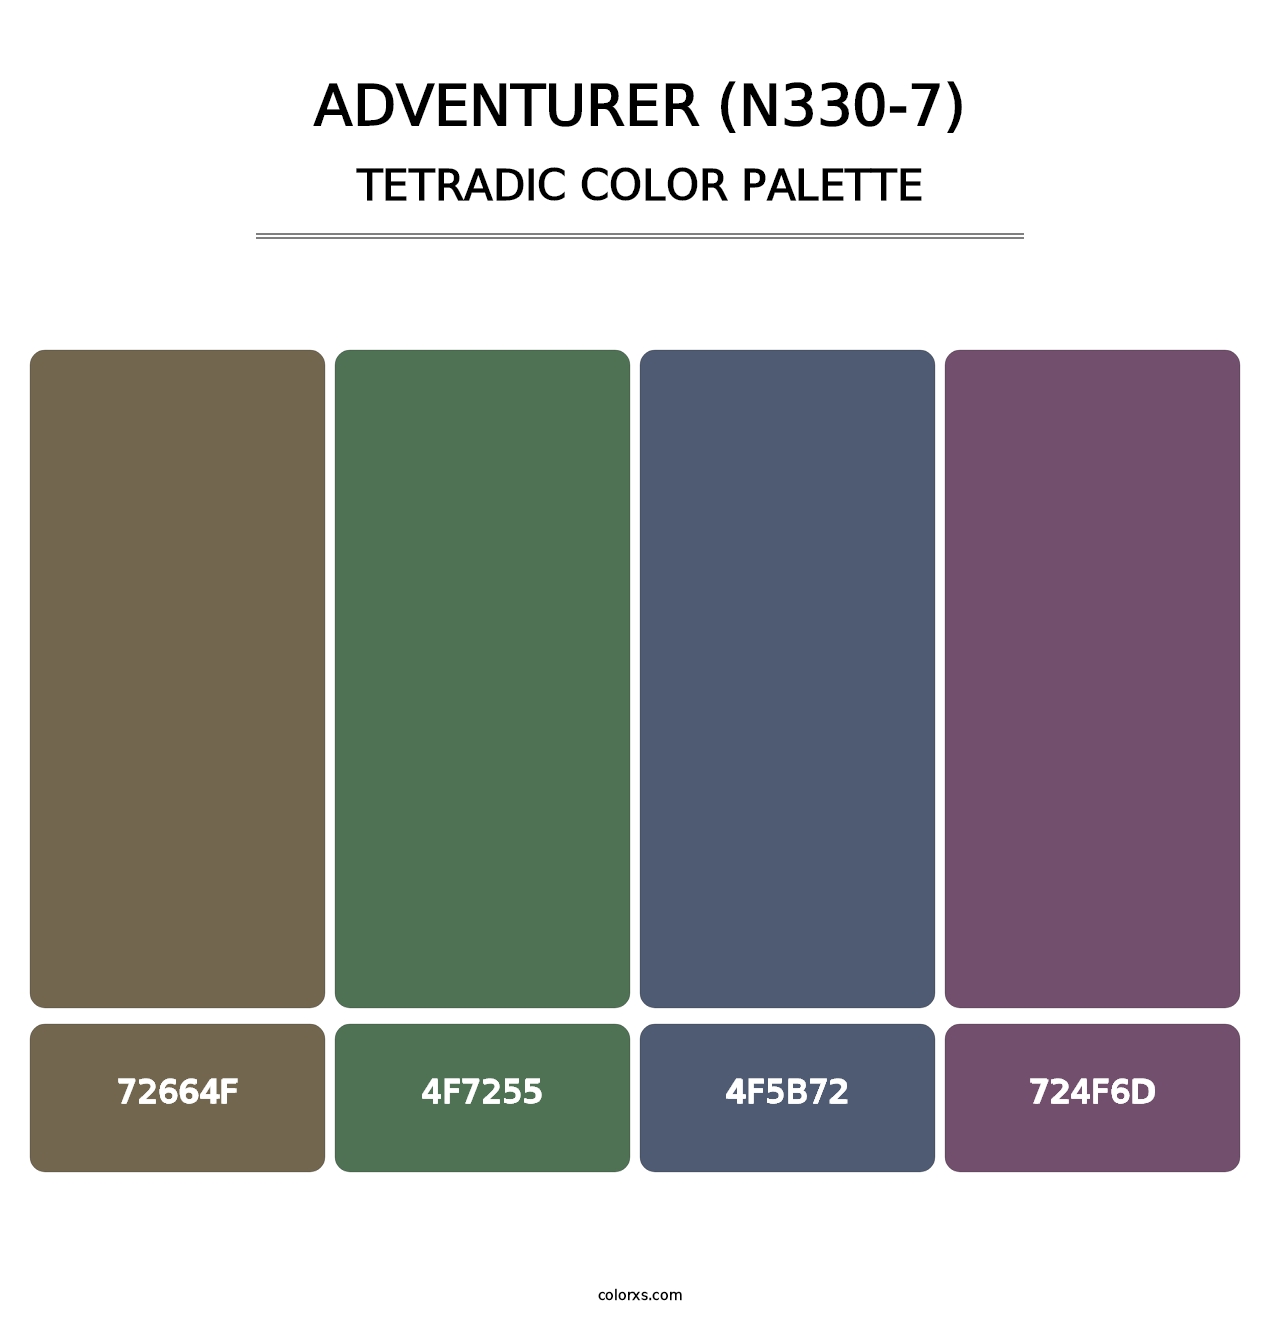 Adventurer (N330-7) - Tetradic Color Palette